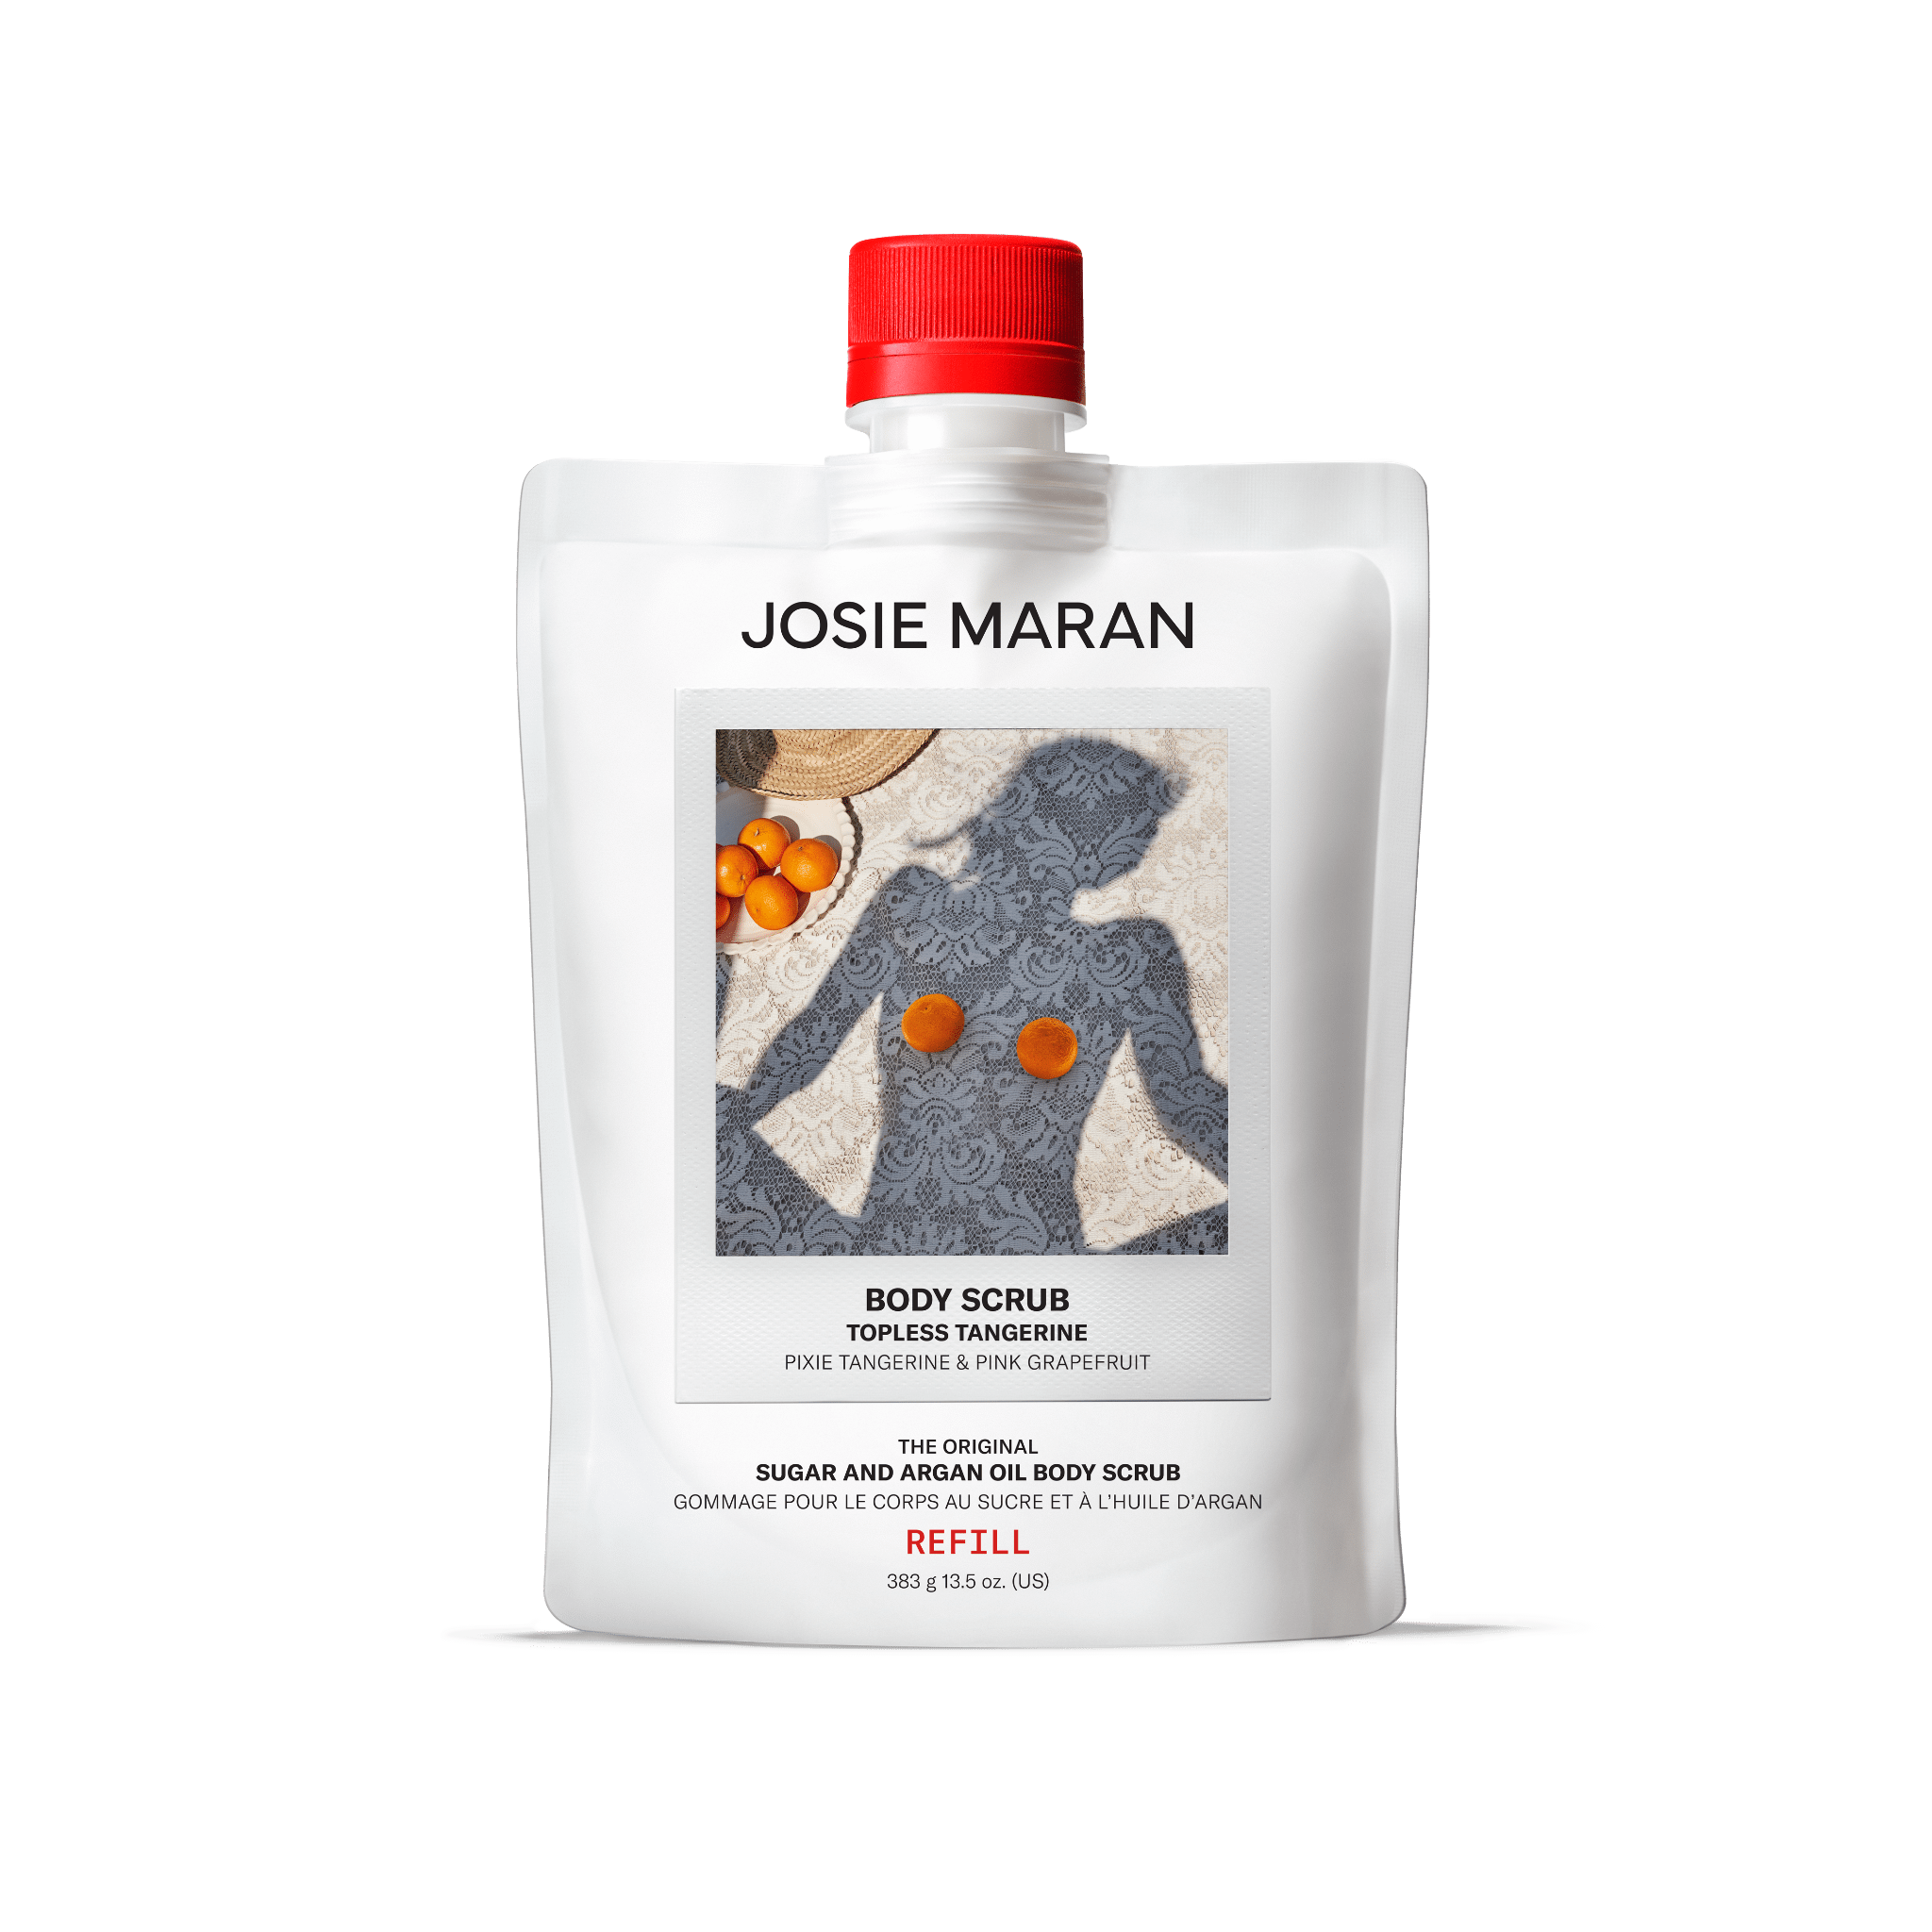 Josie Maran Whipped Argan Oil Body … curated on LTK